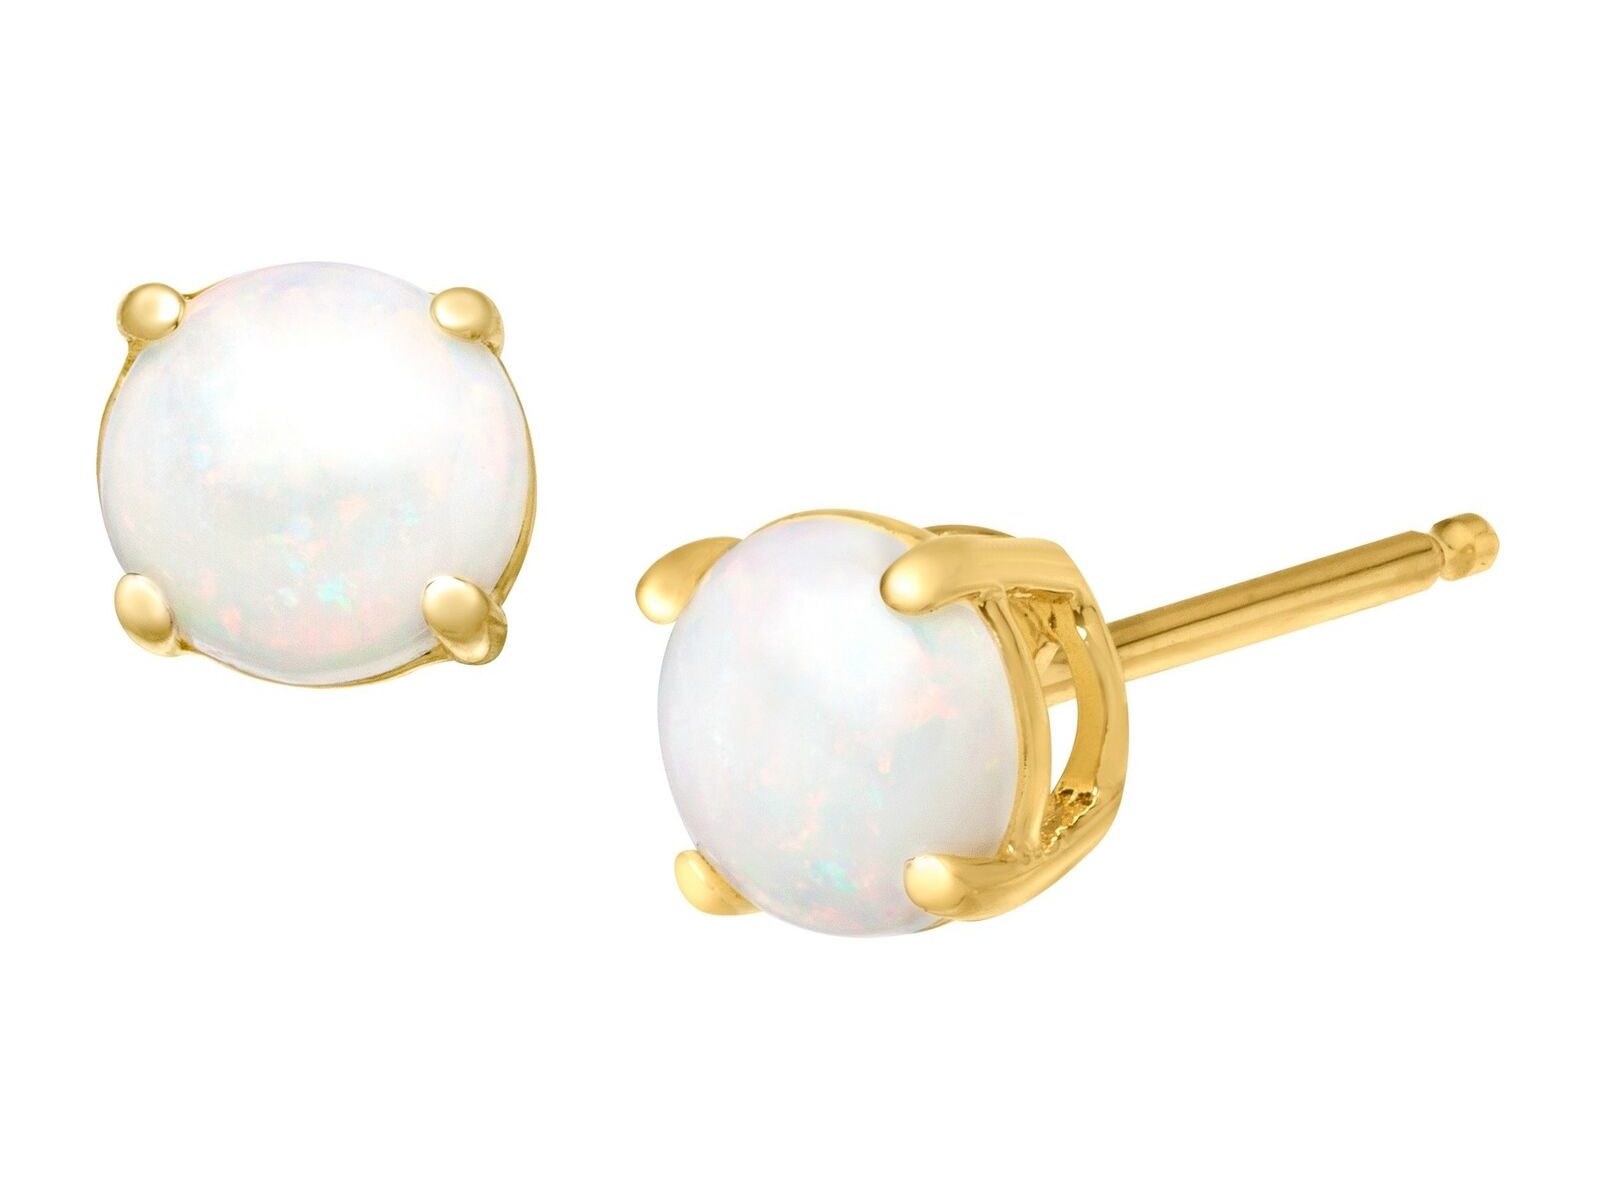 5/8 ct Natural Opal Stud Earrings in 10K Gold